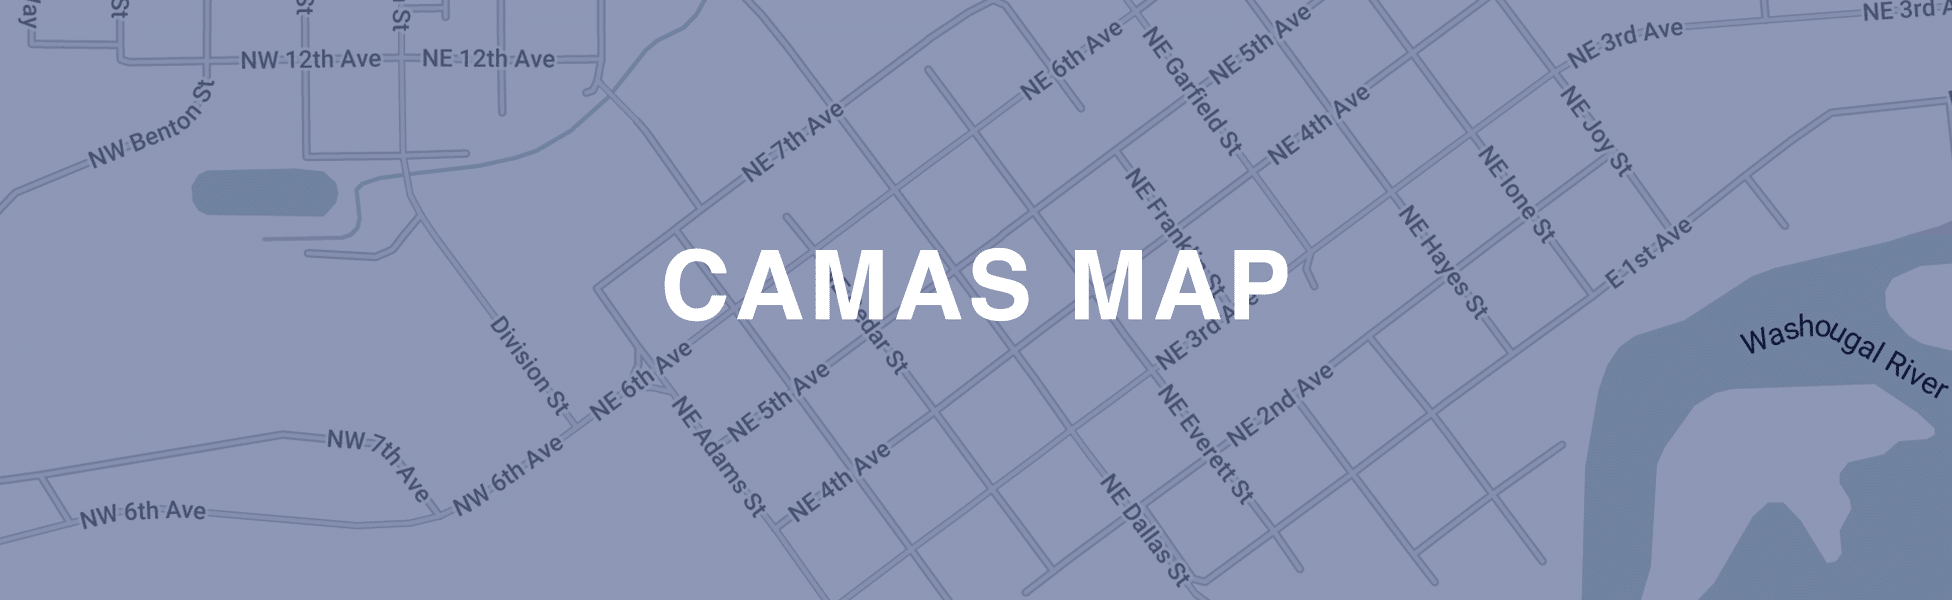 Camas Map 1